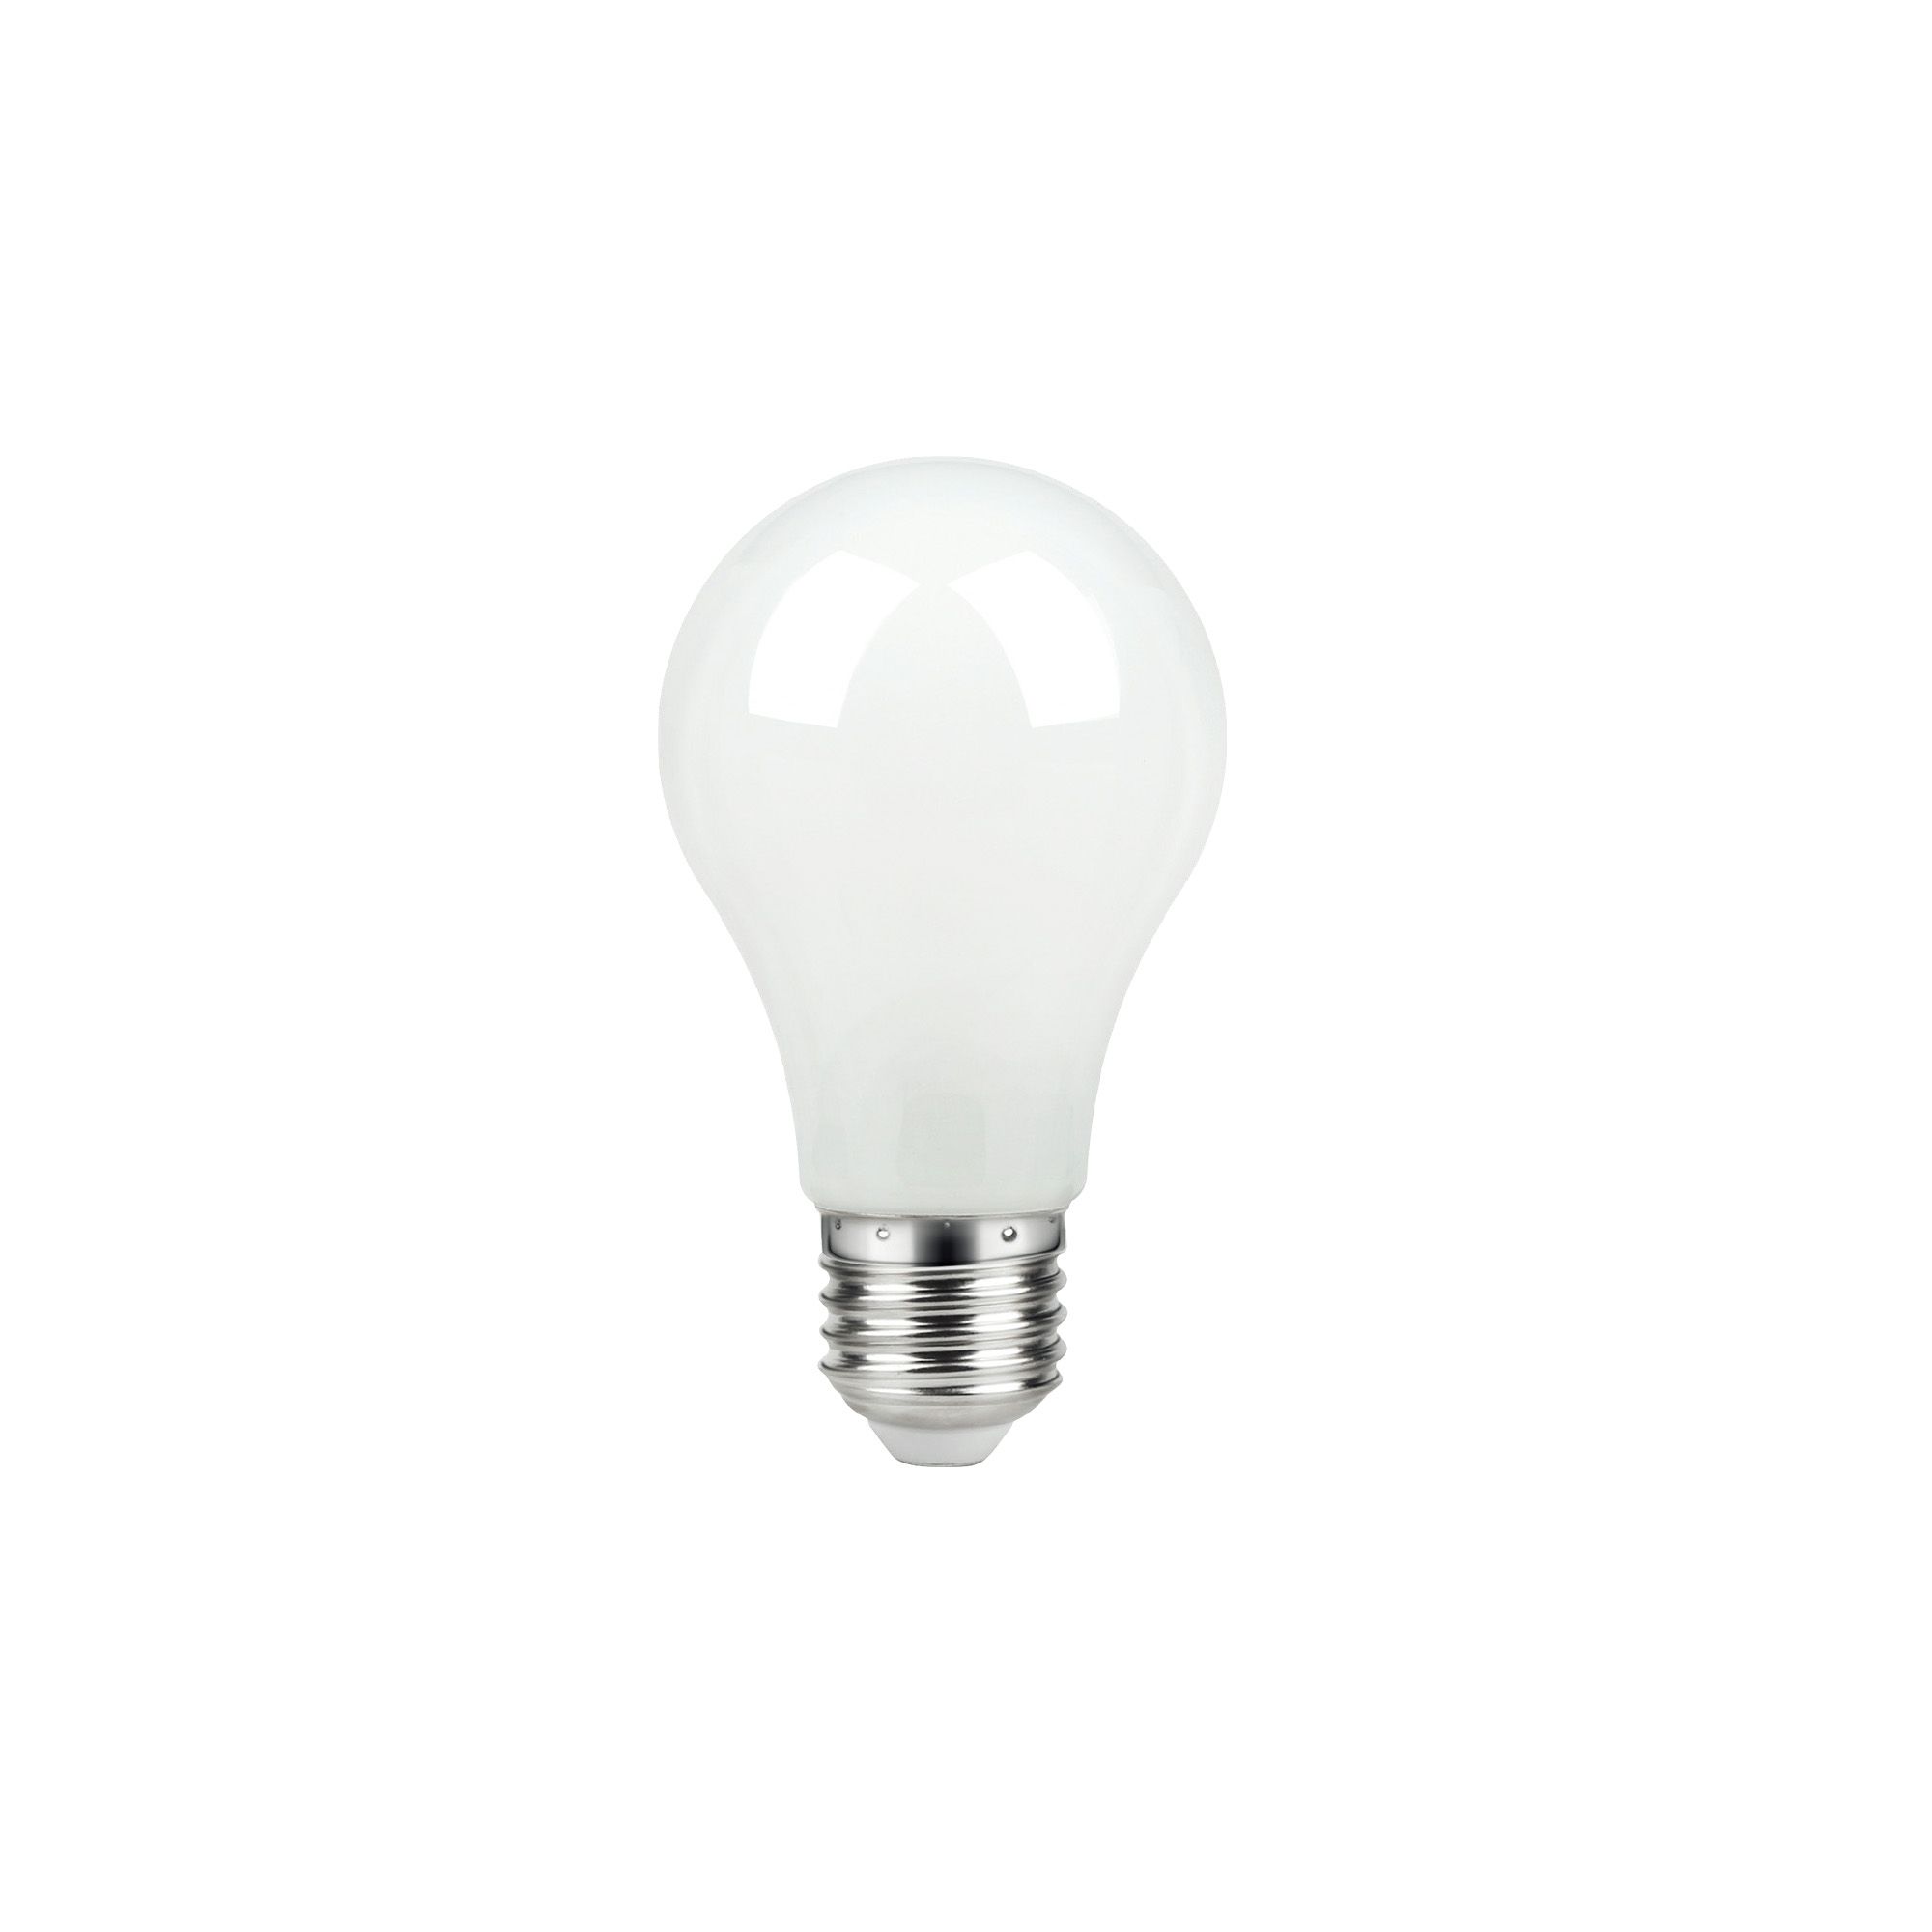 Diall Relax & Work E27 806Lm Gls Warm White & Neutral White Led Filament Light Bulb